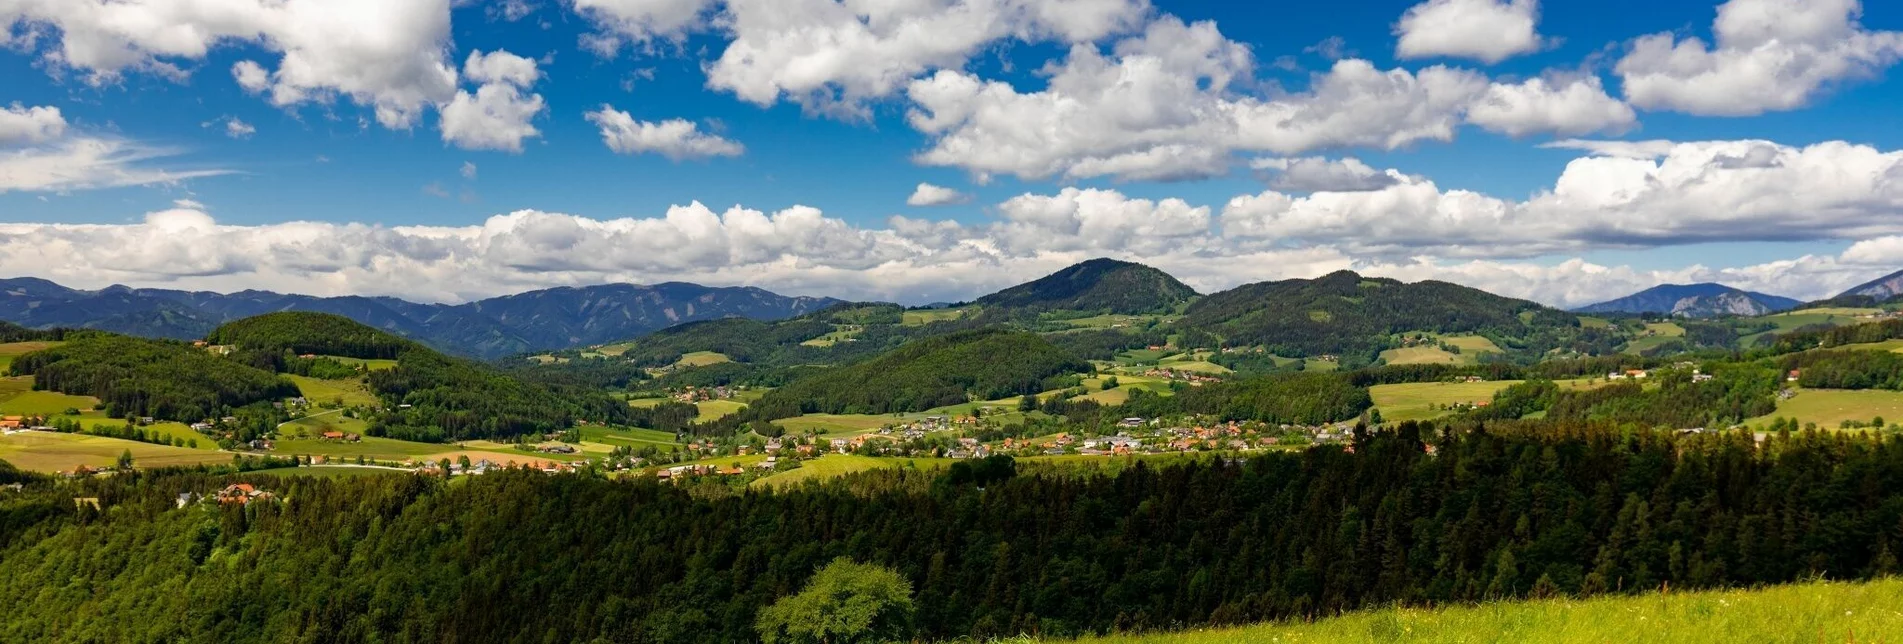 Bike Riding Culinary Mountain Tour – Semriach - Touren-Impression #1 | © Region Graz